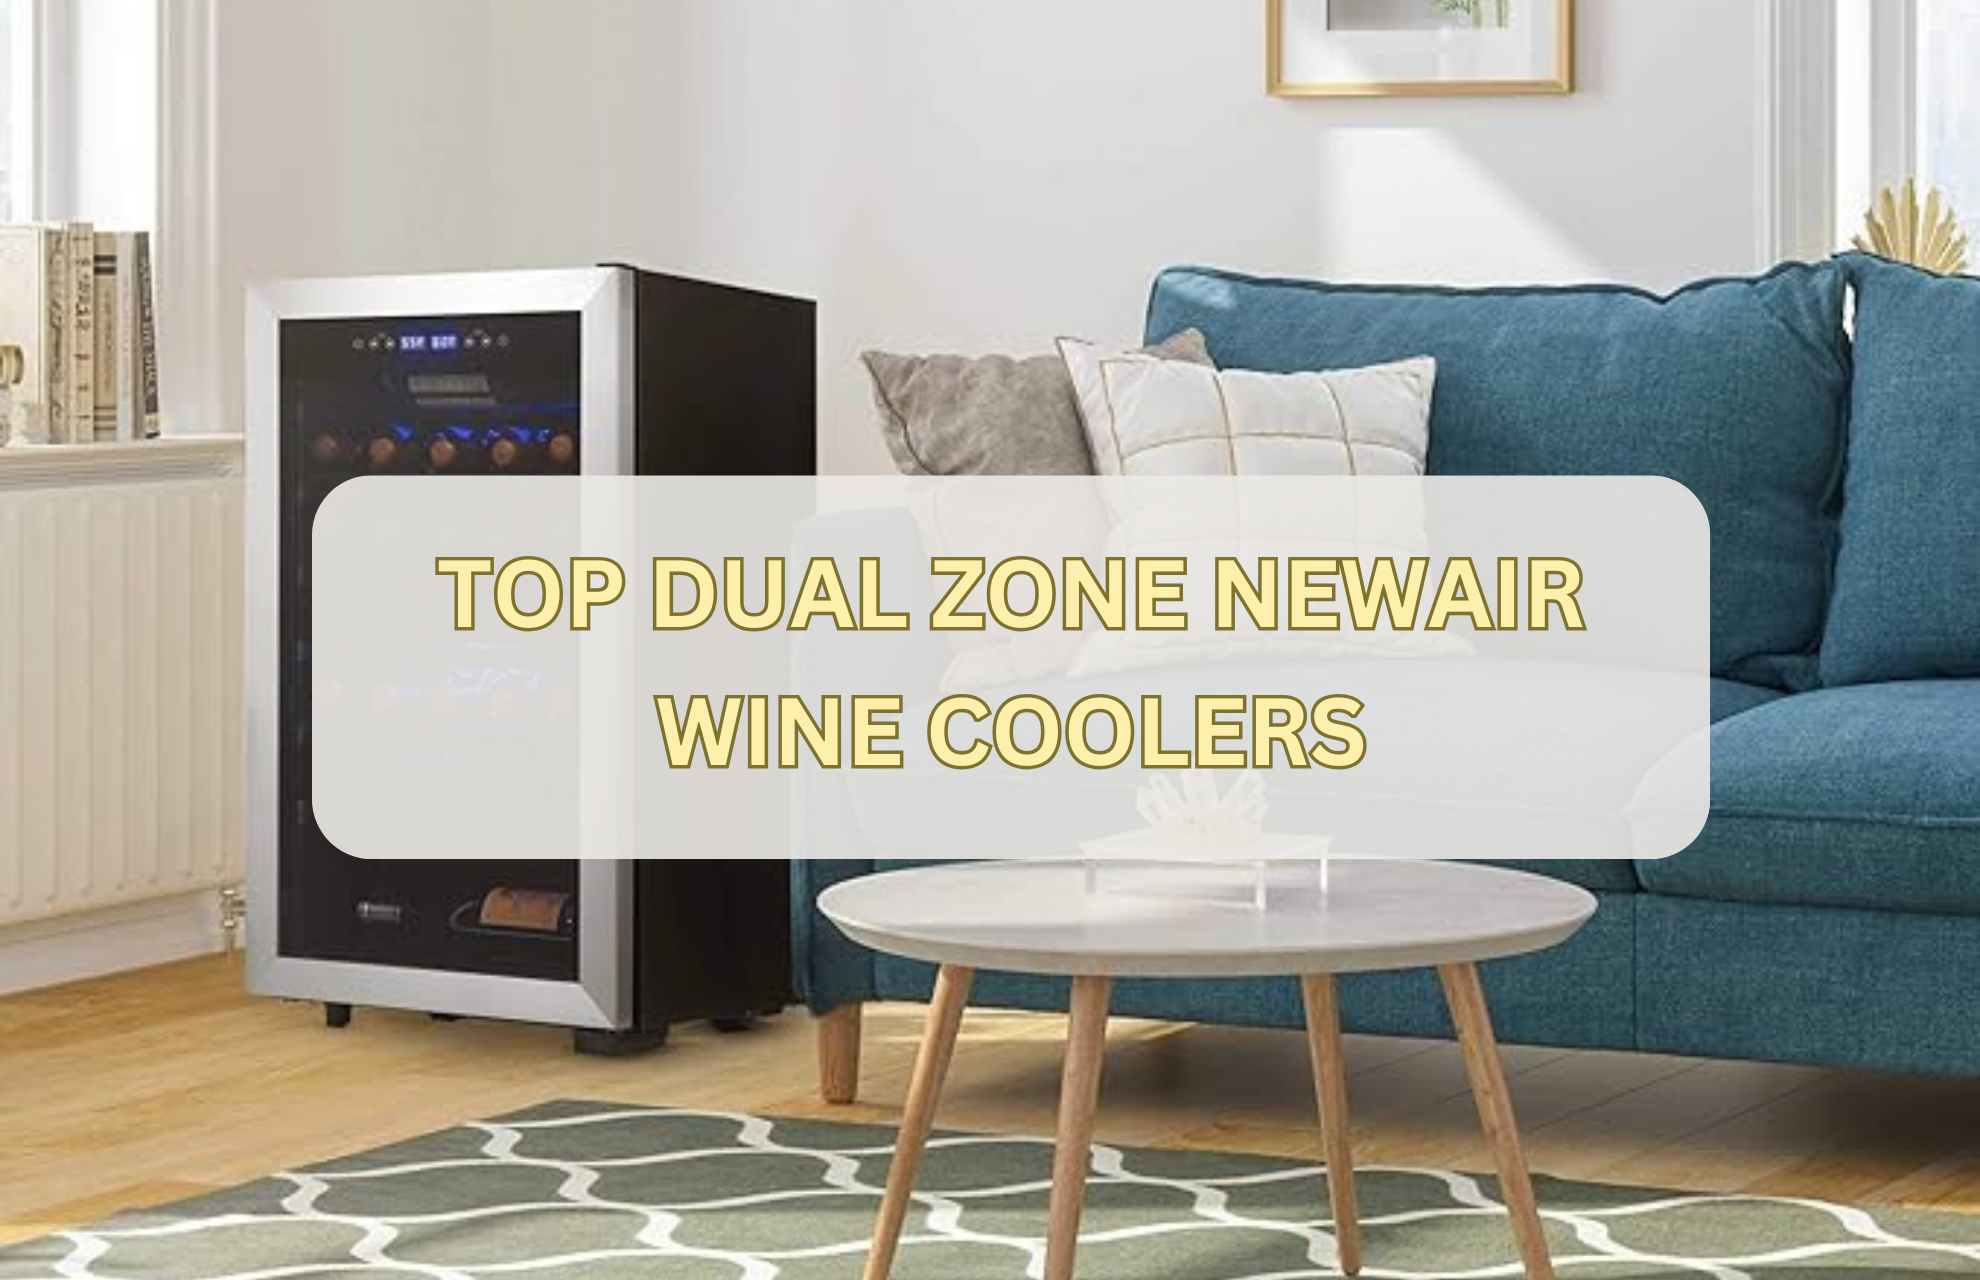 TOP DUAL ZONE NEWAIR WINE COOLERS